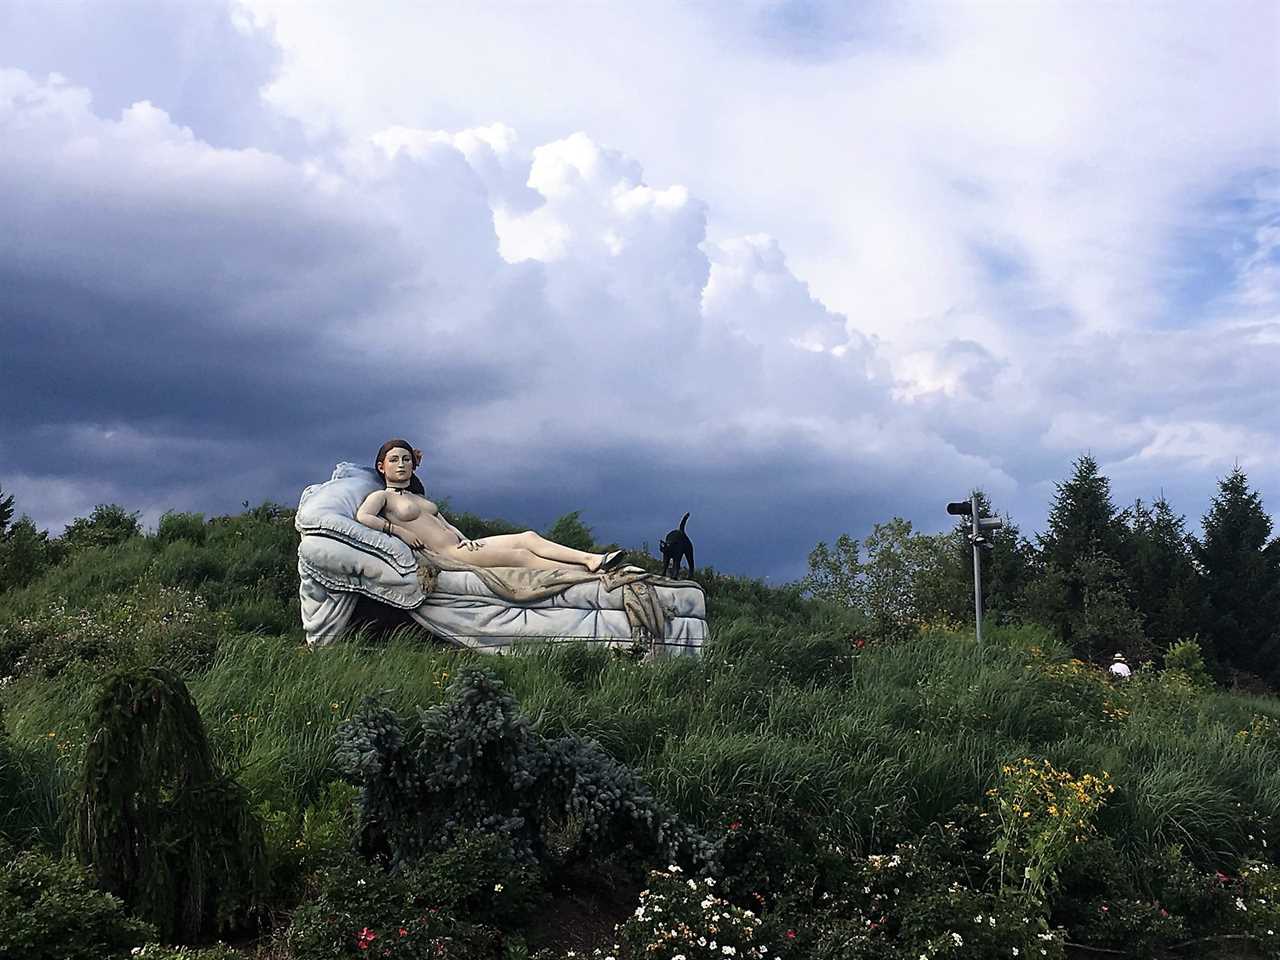 women laying in bet sculpture at garden of sculptures Family Fun